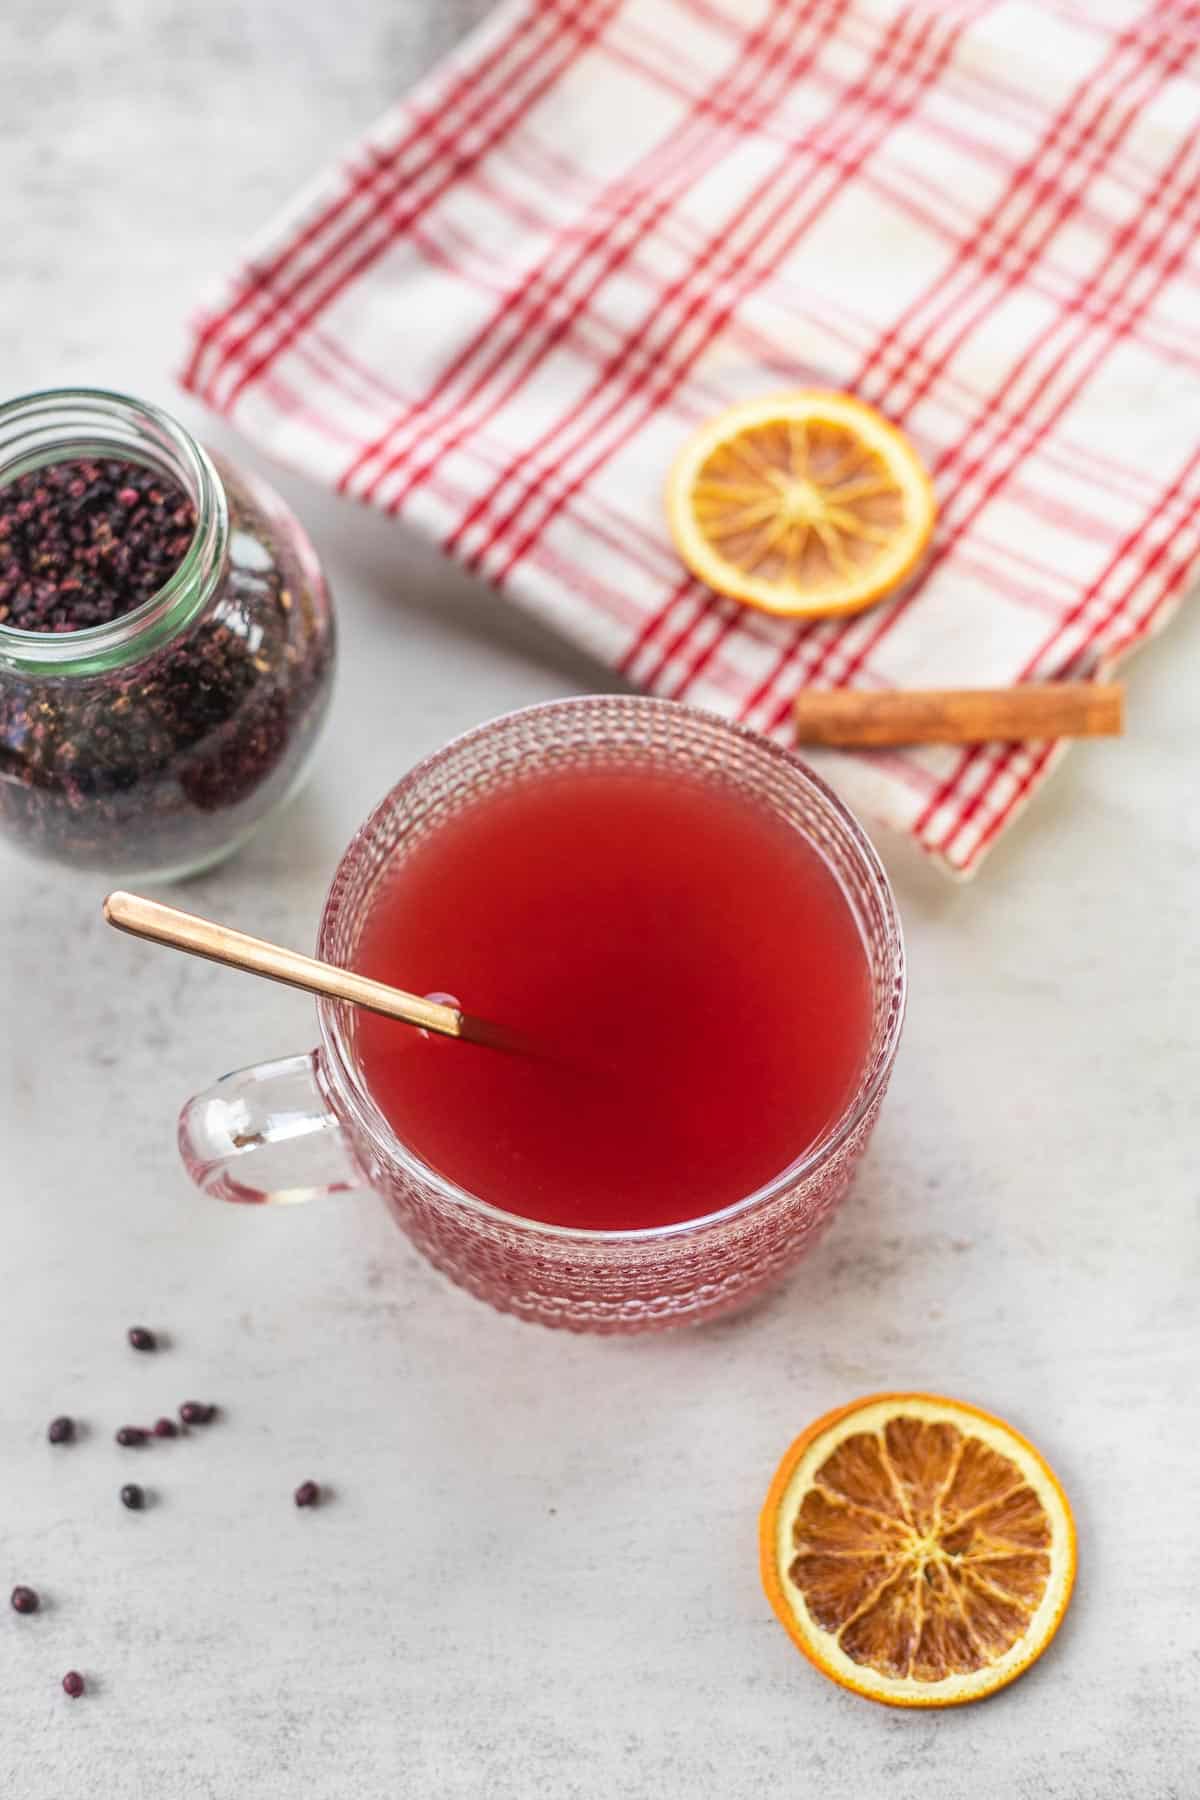 elderberry tea in glass teacup with cinnamon stick, flannel, elderberries and dried oranges